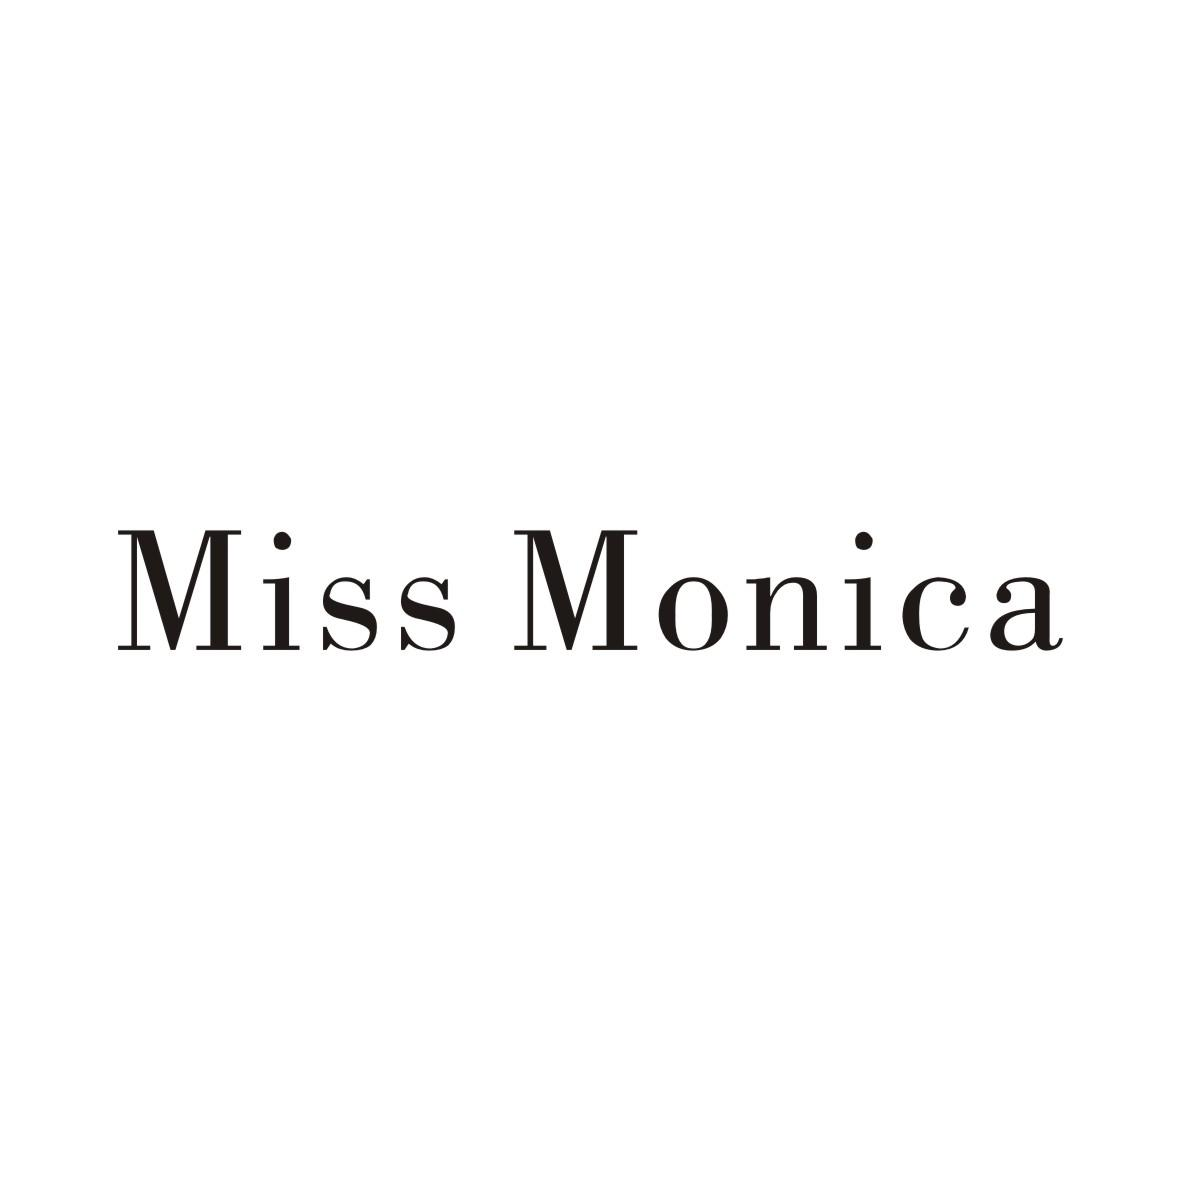 MISS MONICA商标转让